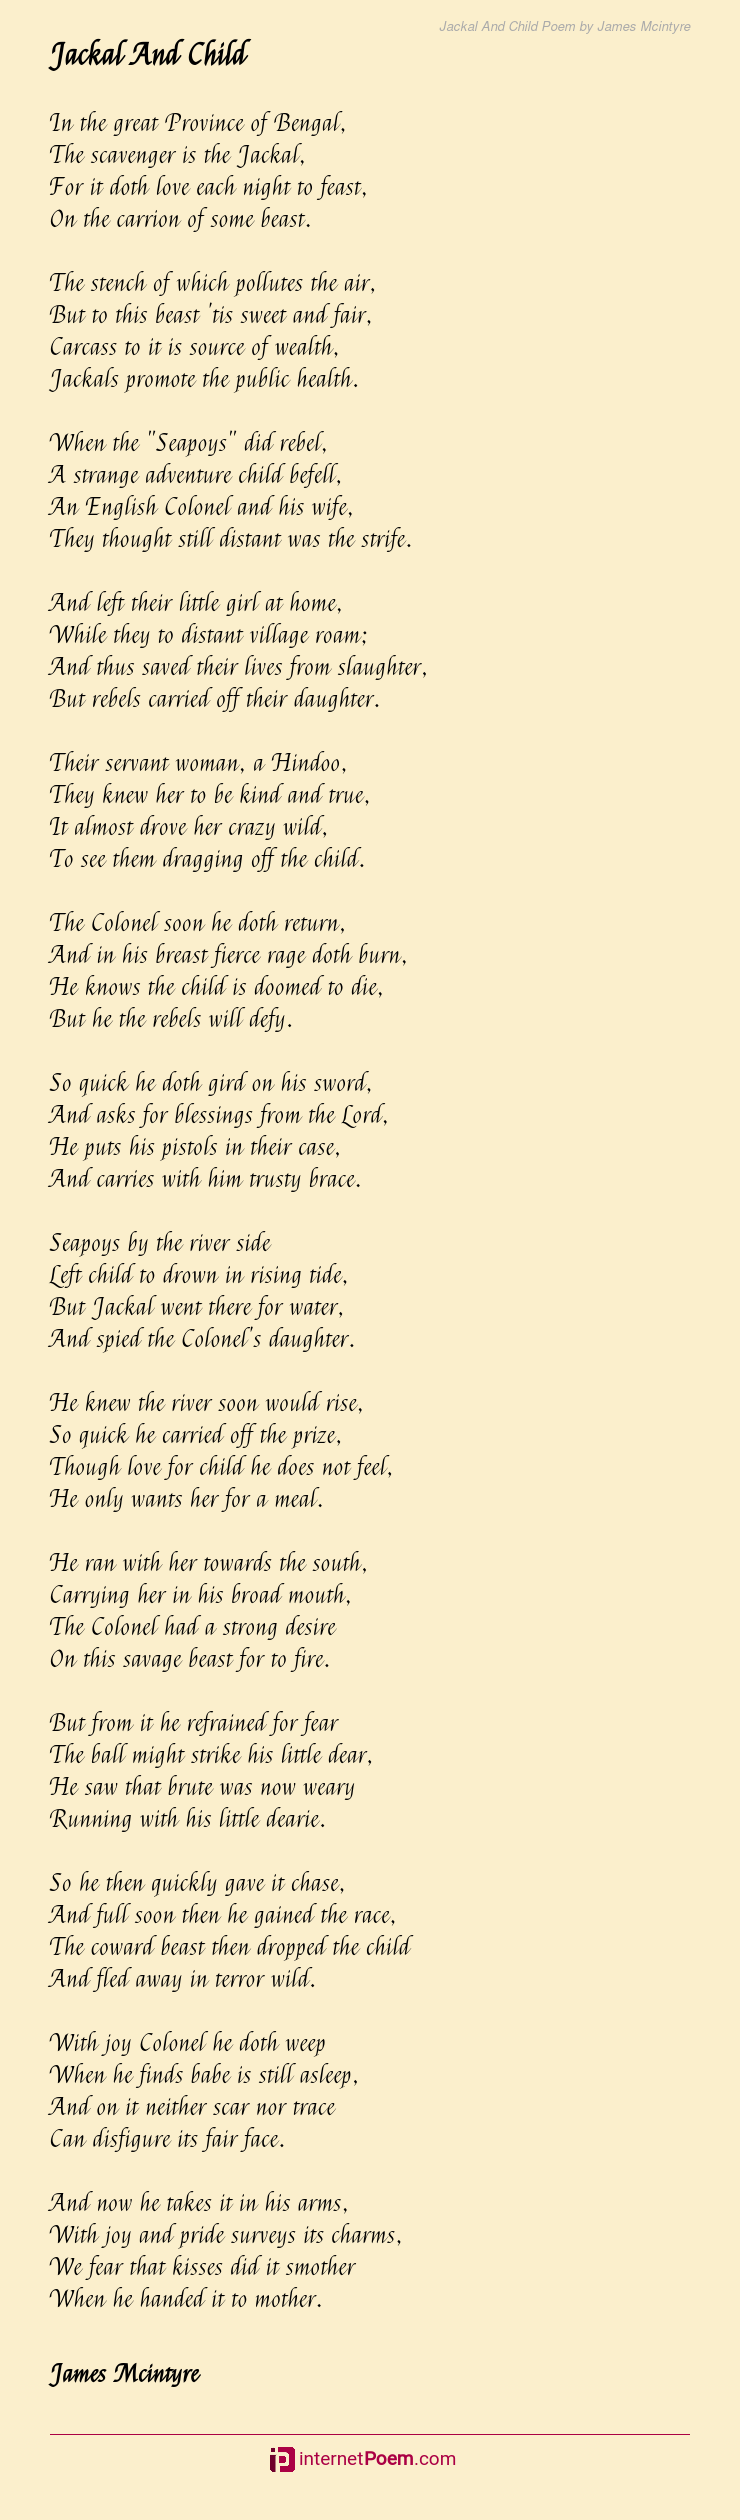 Jackal And Child Poem by James Mcintyre